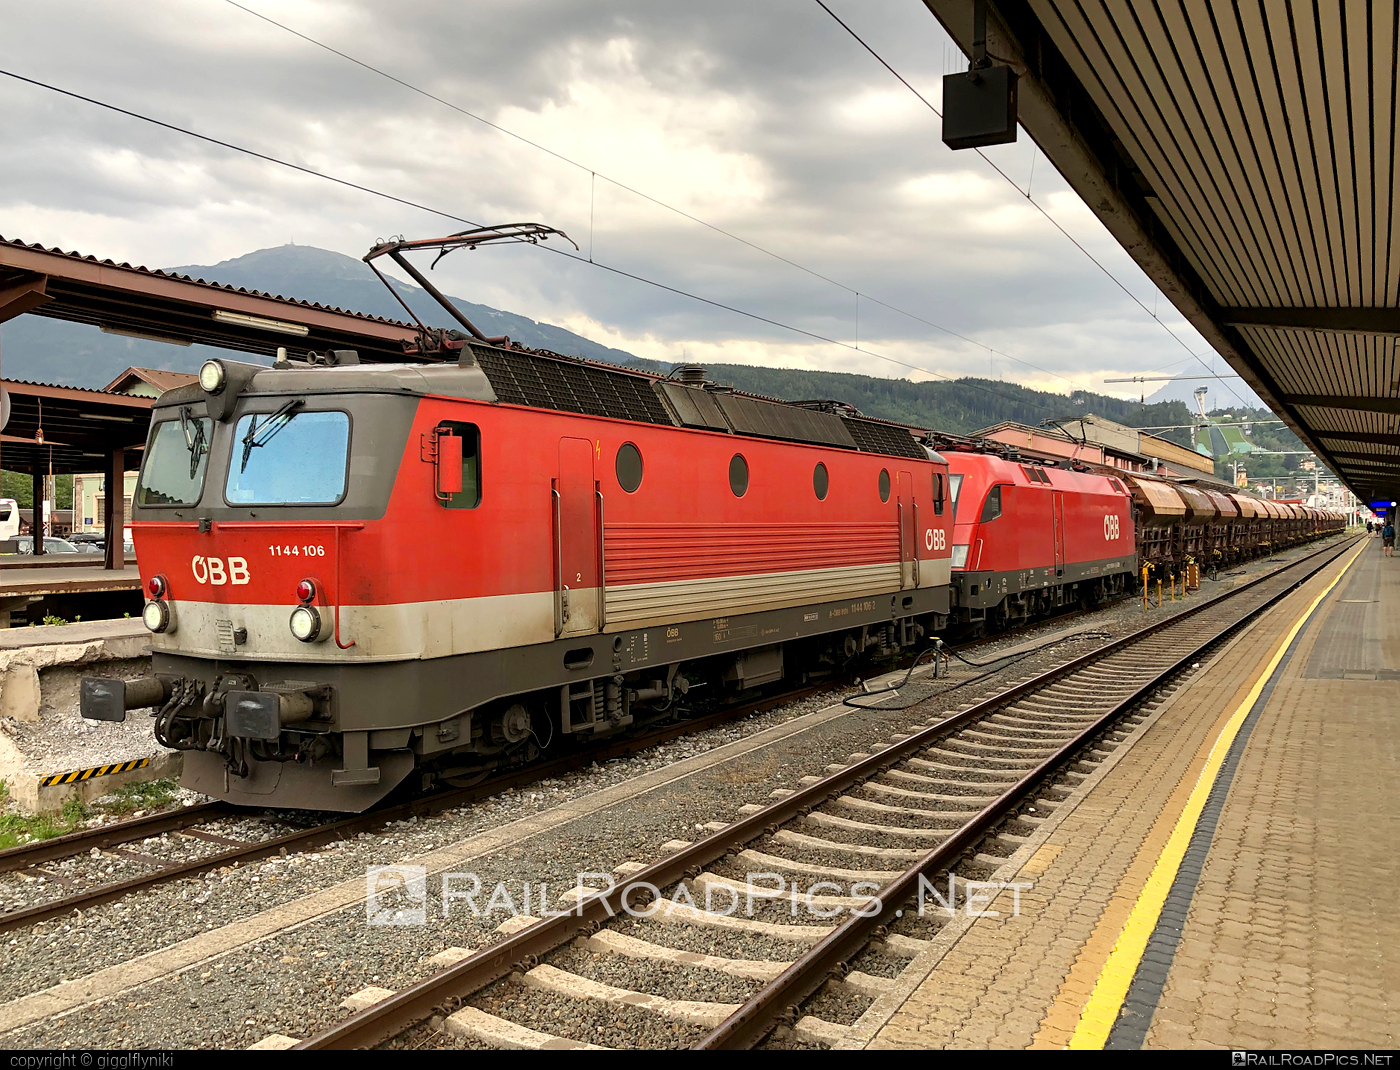 SGP ÖBB Class 1144 - 1144 106 operated by Rail Cargo Austria AG #hopperwagon #obb #obbclass1144 #osterreichischebundesbahnen #rcw #sgp #sgp1144 #simmeringgrazpauker